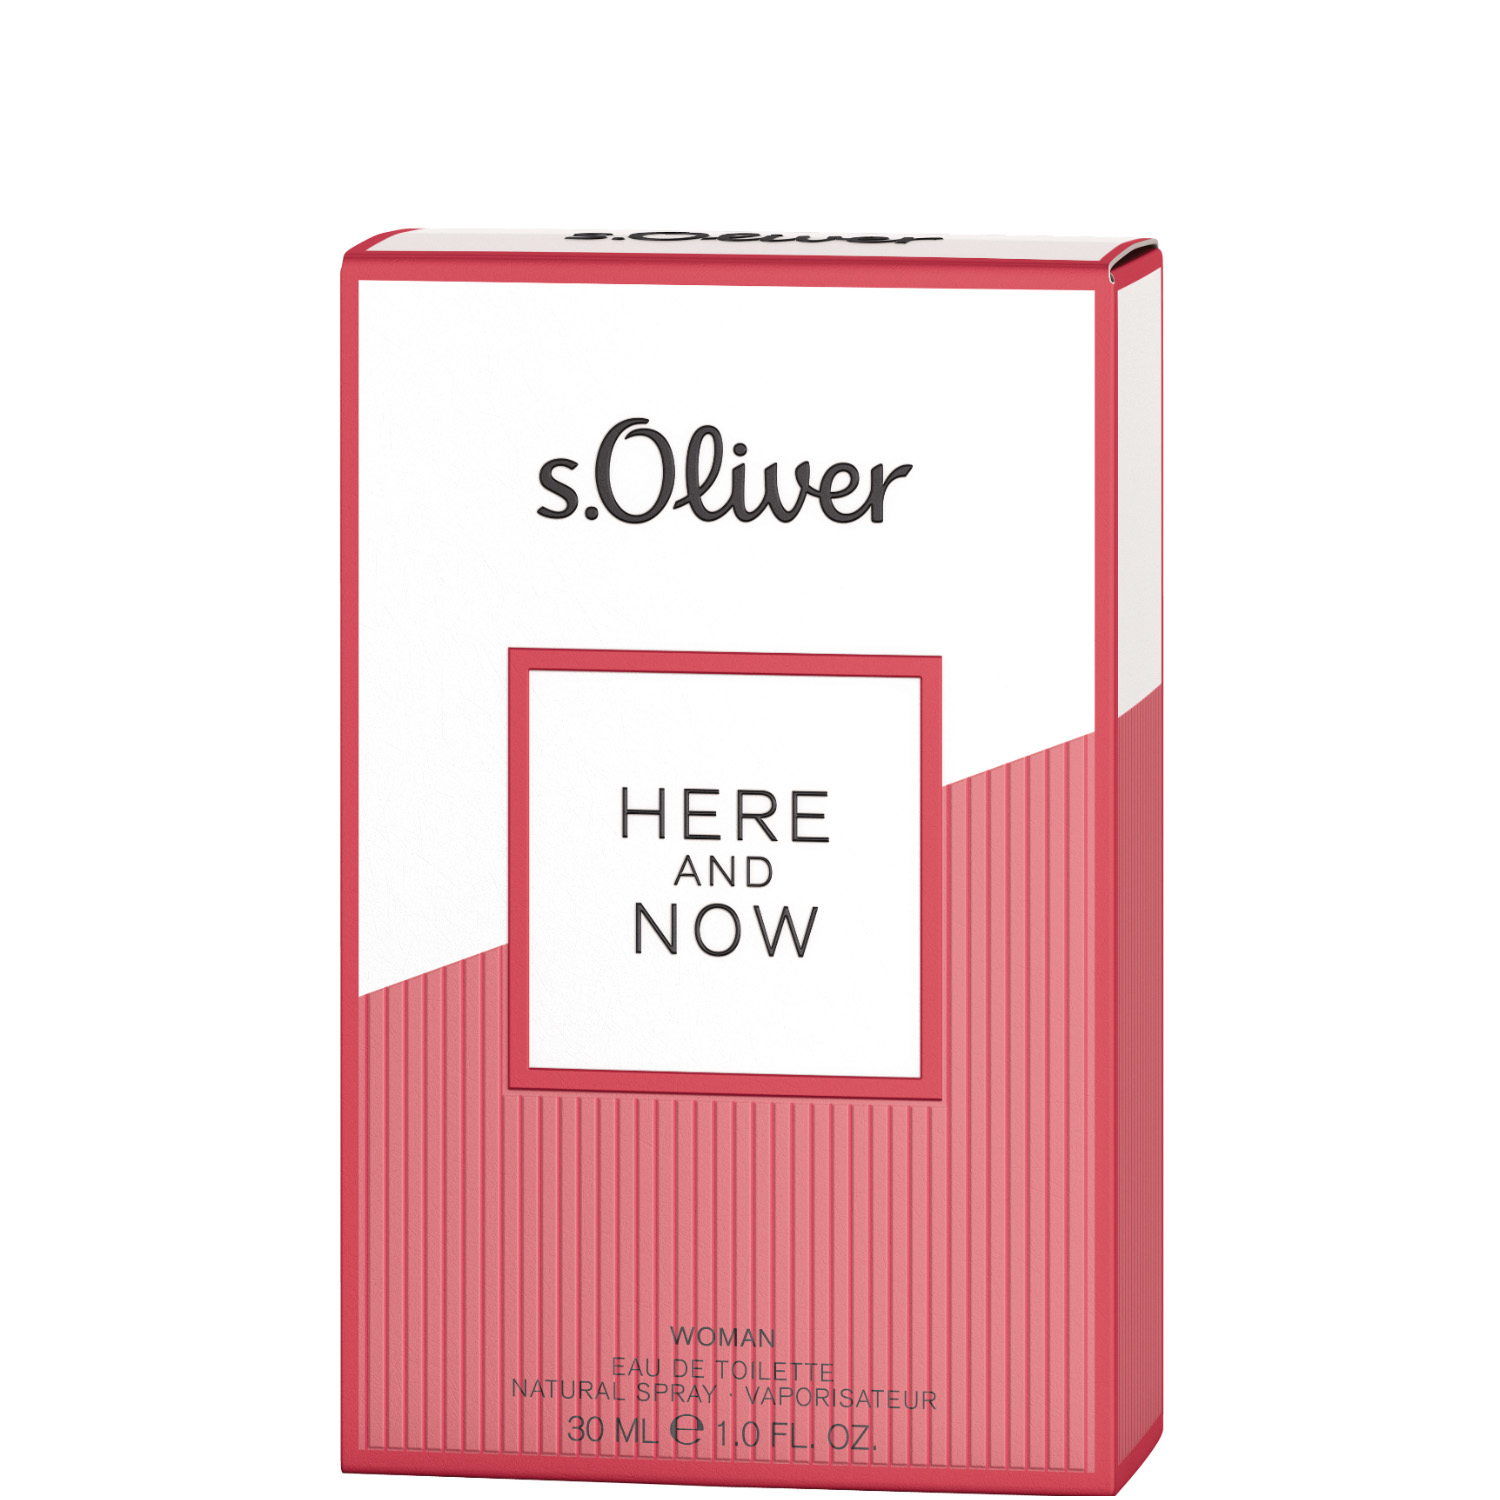 S.Oliver Here And Now Women Eau de Toilette 30ml